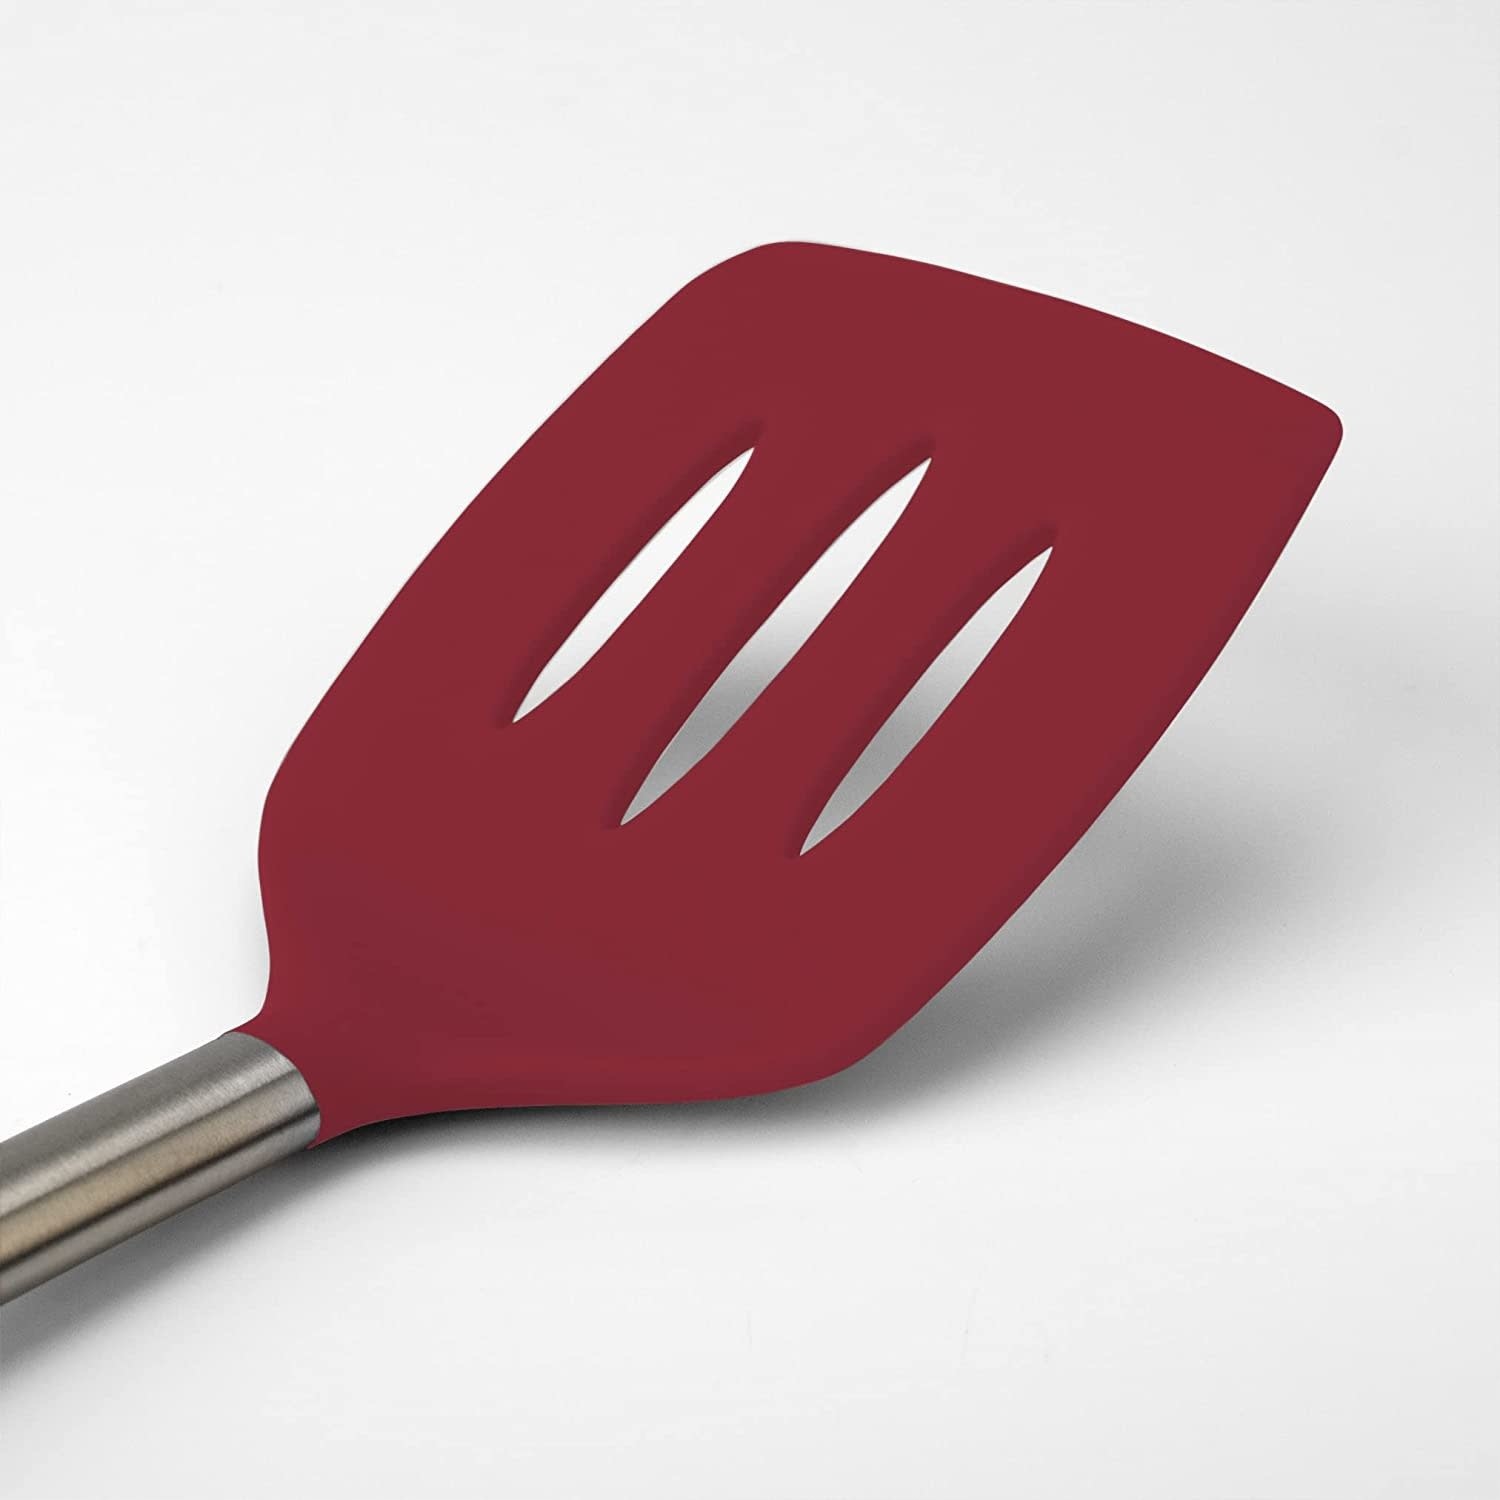 https://cdn.shoplightspeed.com/shops/633447/files/43801993/1500x4000x3/cayenne-red-slotted-turner-spatula.jpg